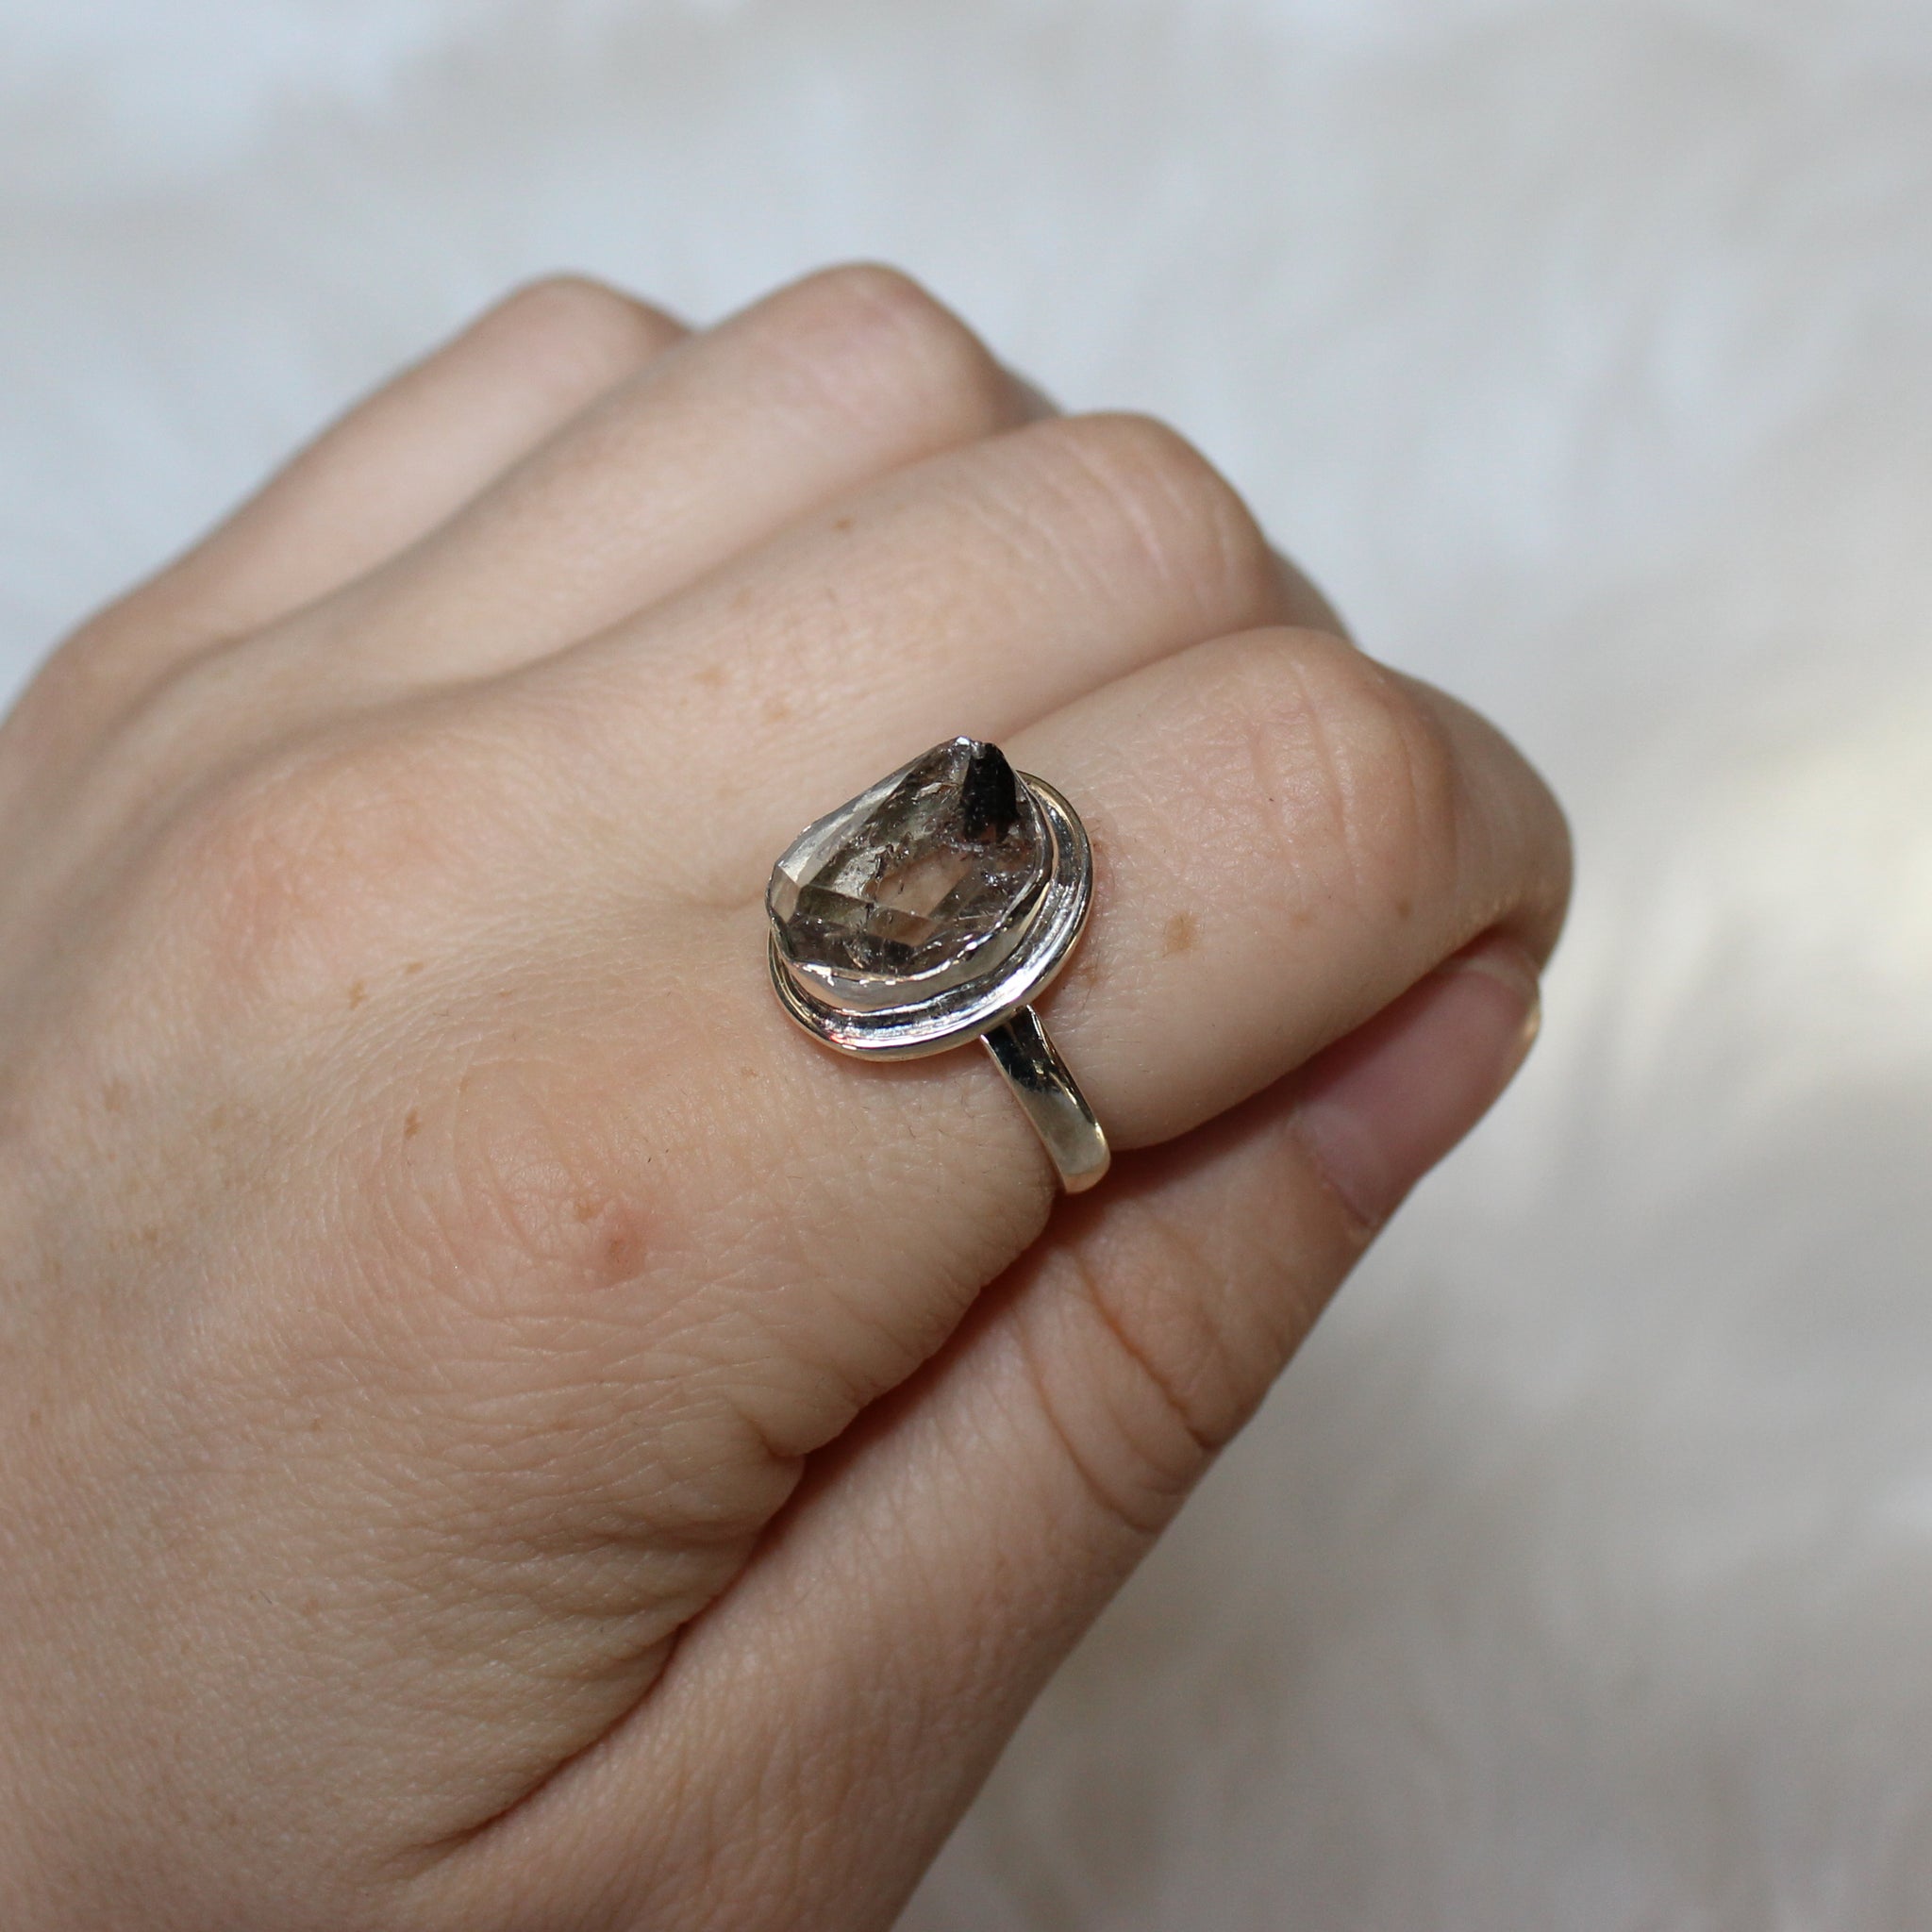 Herkimer Diamond Ring size 7.75